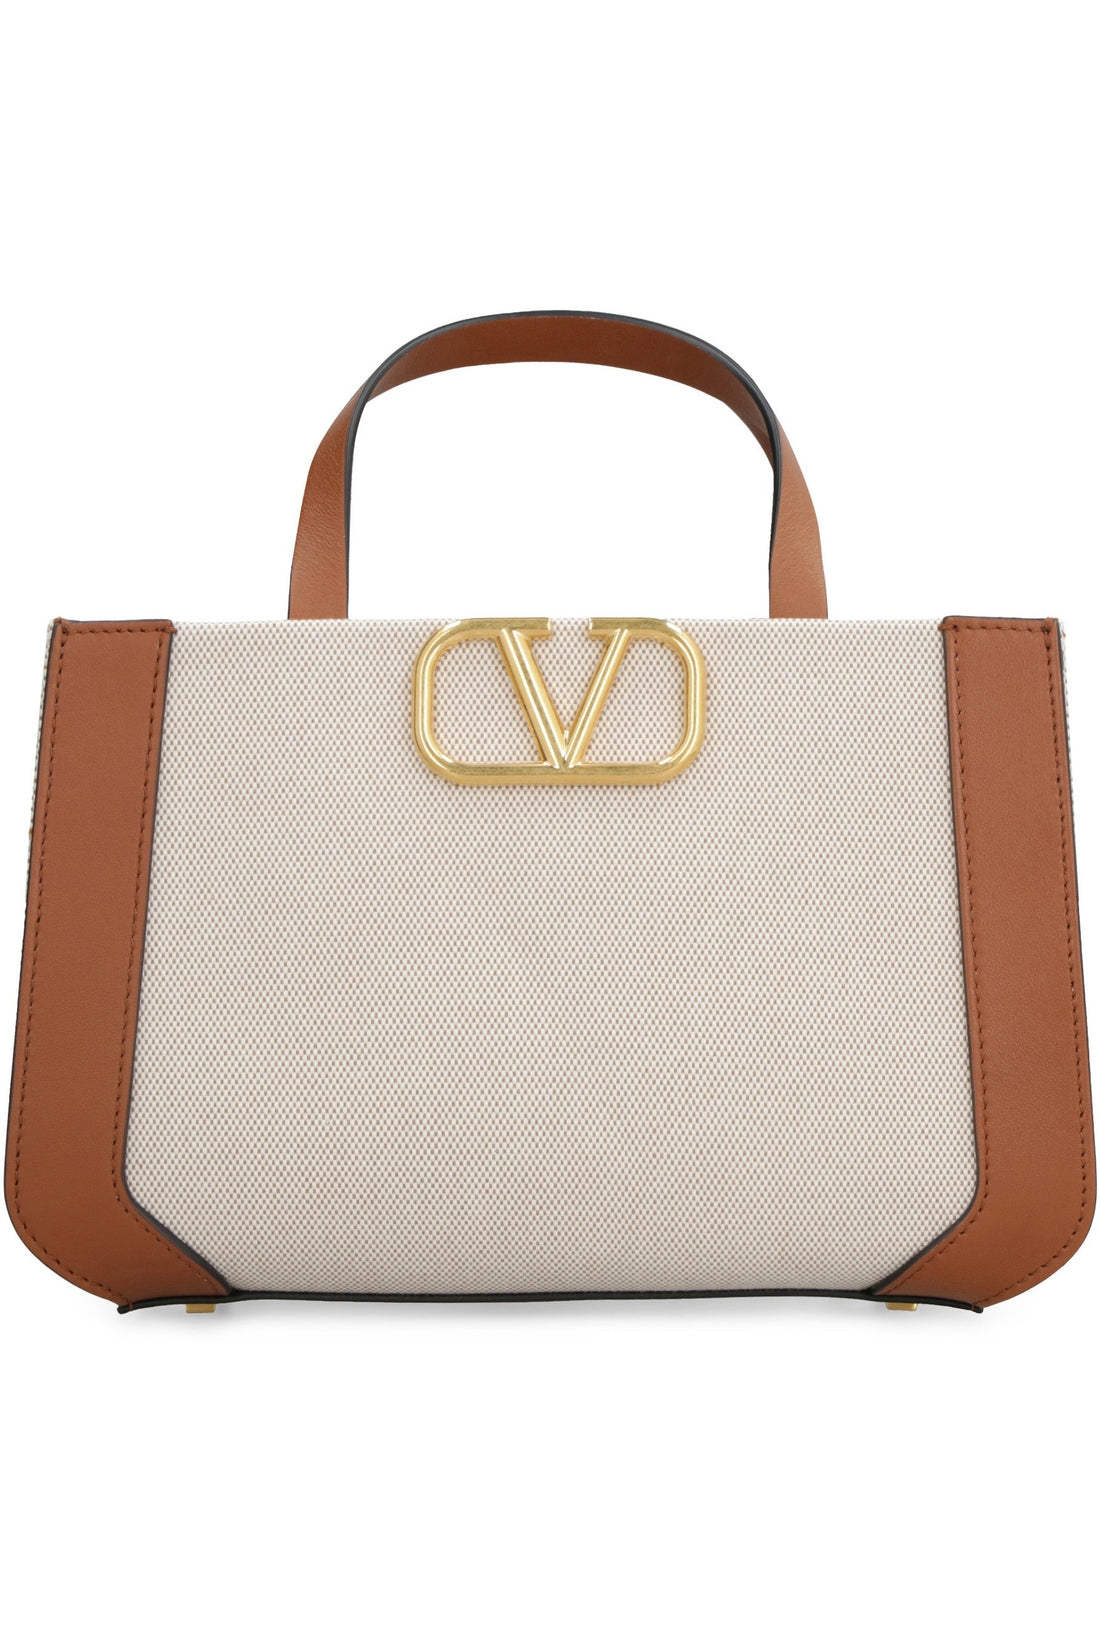 Valentino-OUTLET-SALE-VLogo Signature canvas handbag-ARCHIVIST